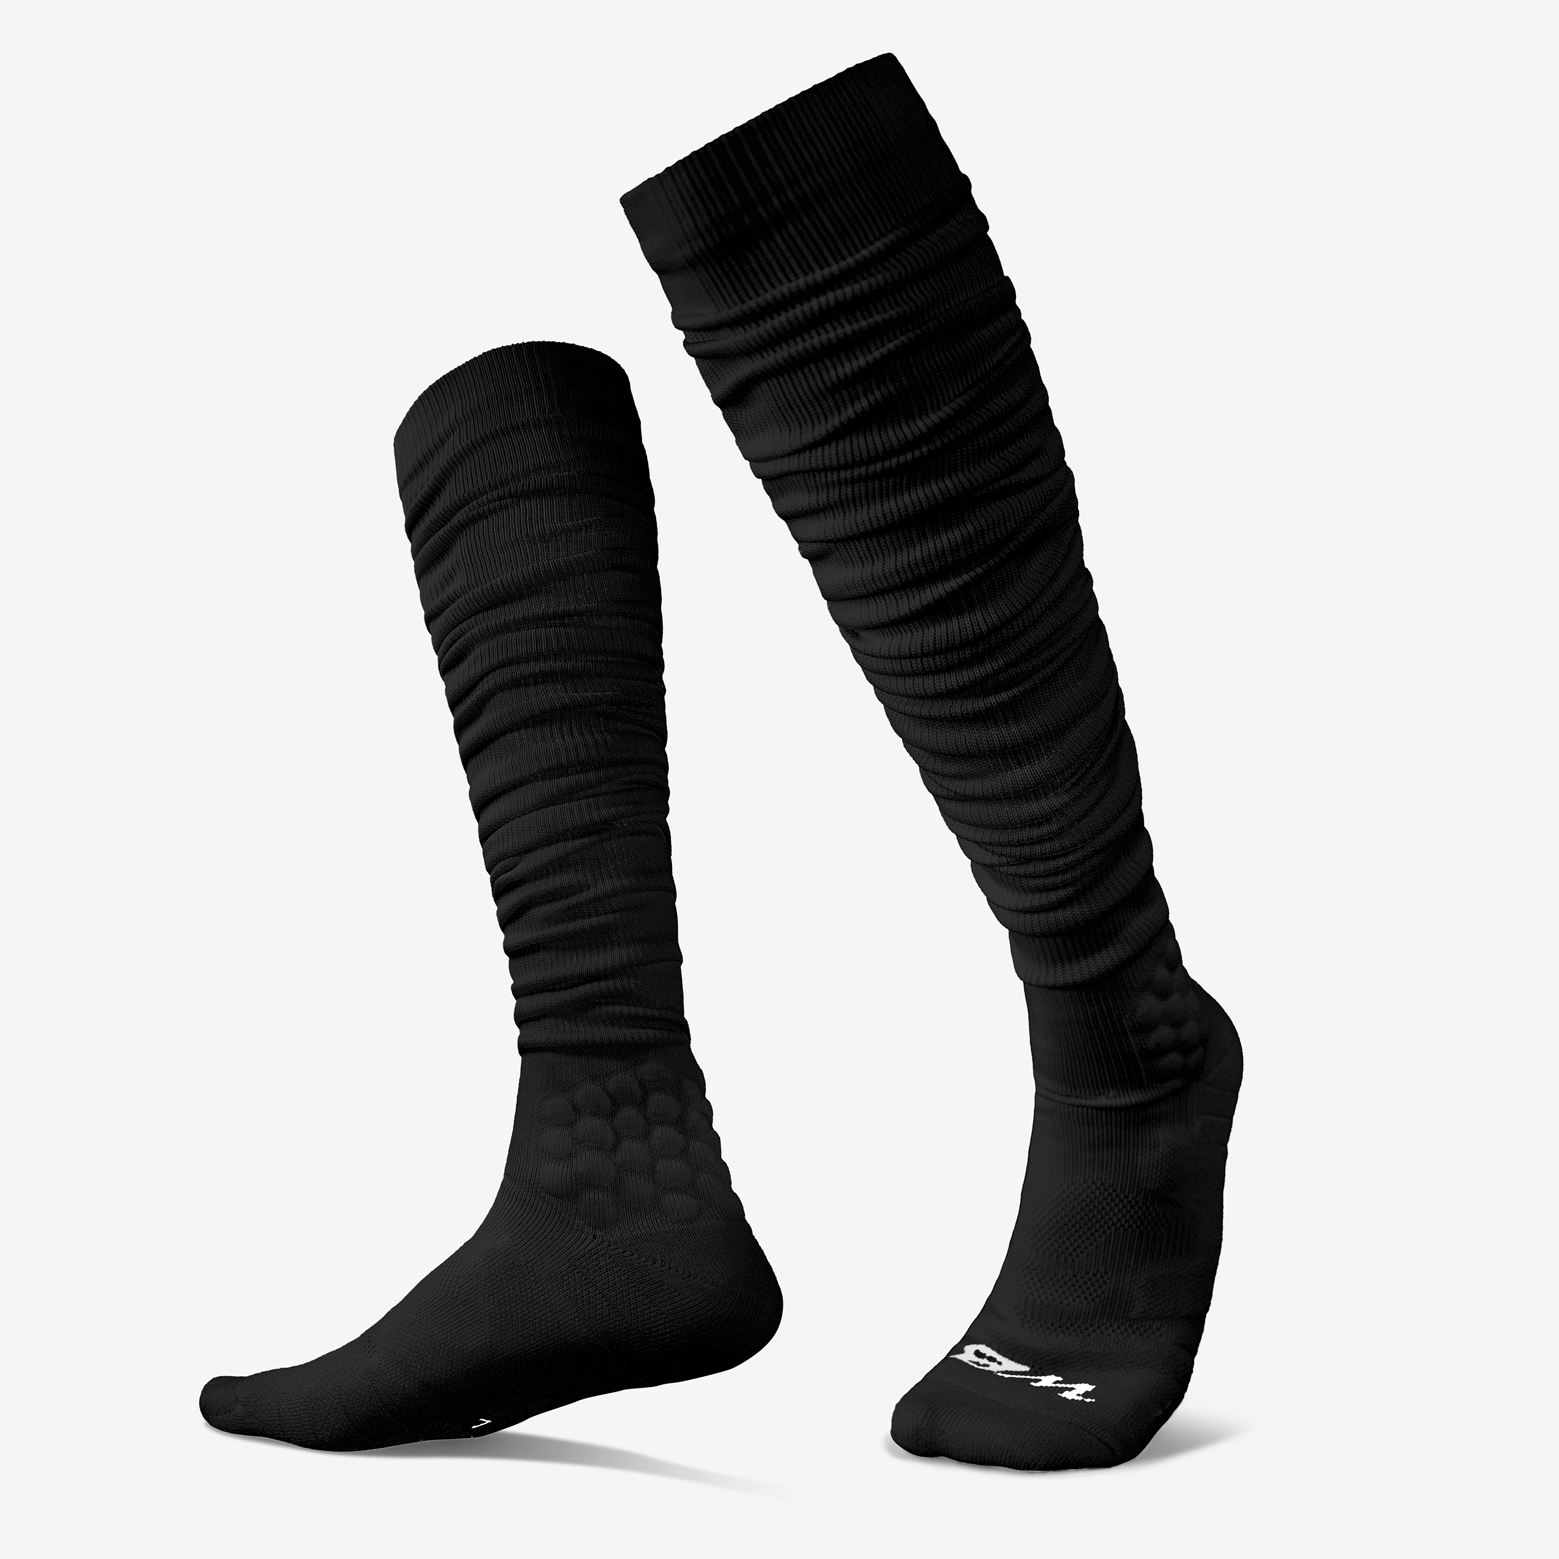 Grip Socks Soccer, Compression Athletic Sock Long Knee Football Socks